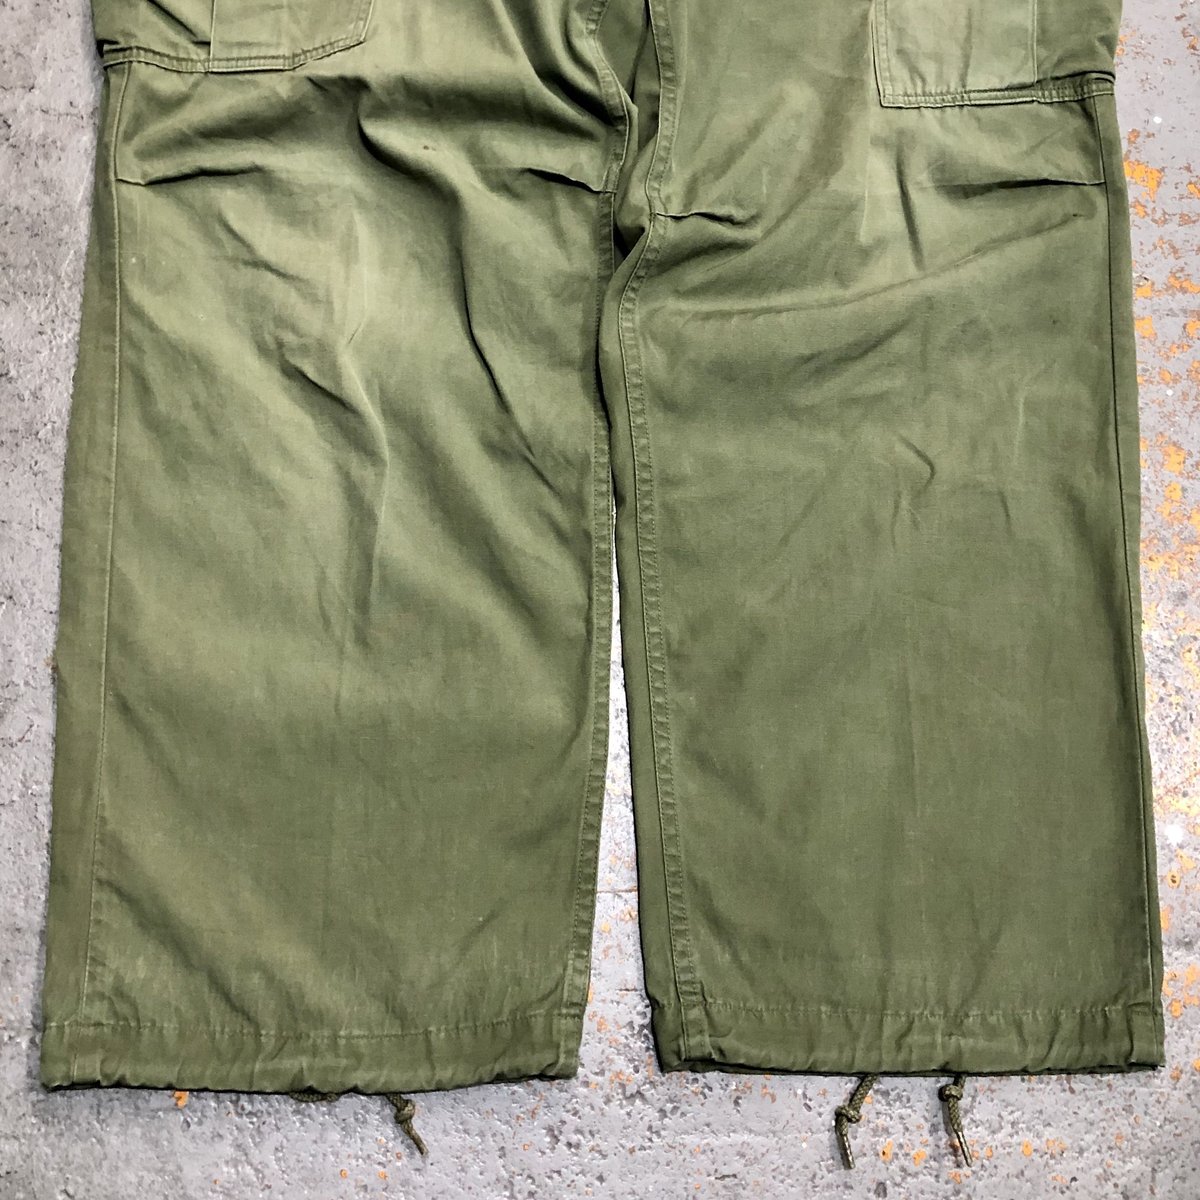 1967 Vietnam Jungle Fatigue Pants Non-Rip 3rd Type SIZE: Medium-Short